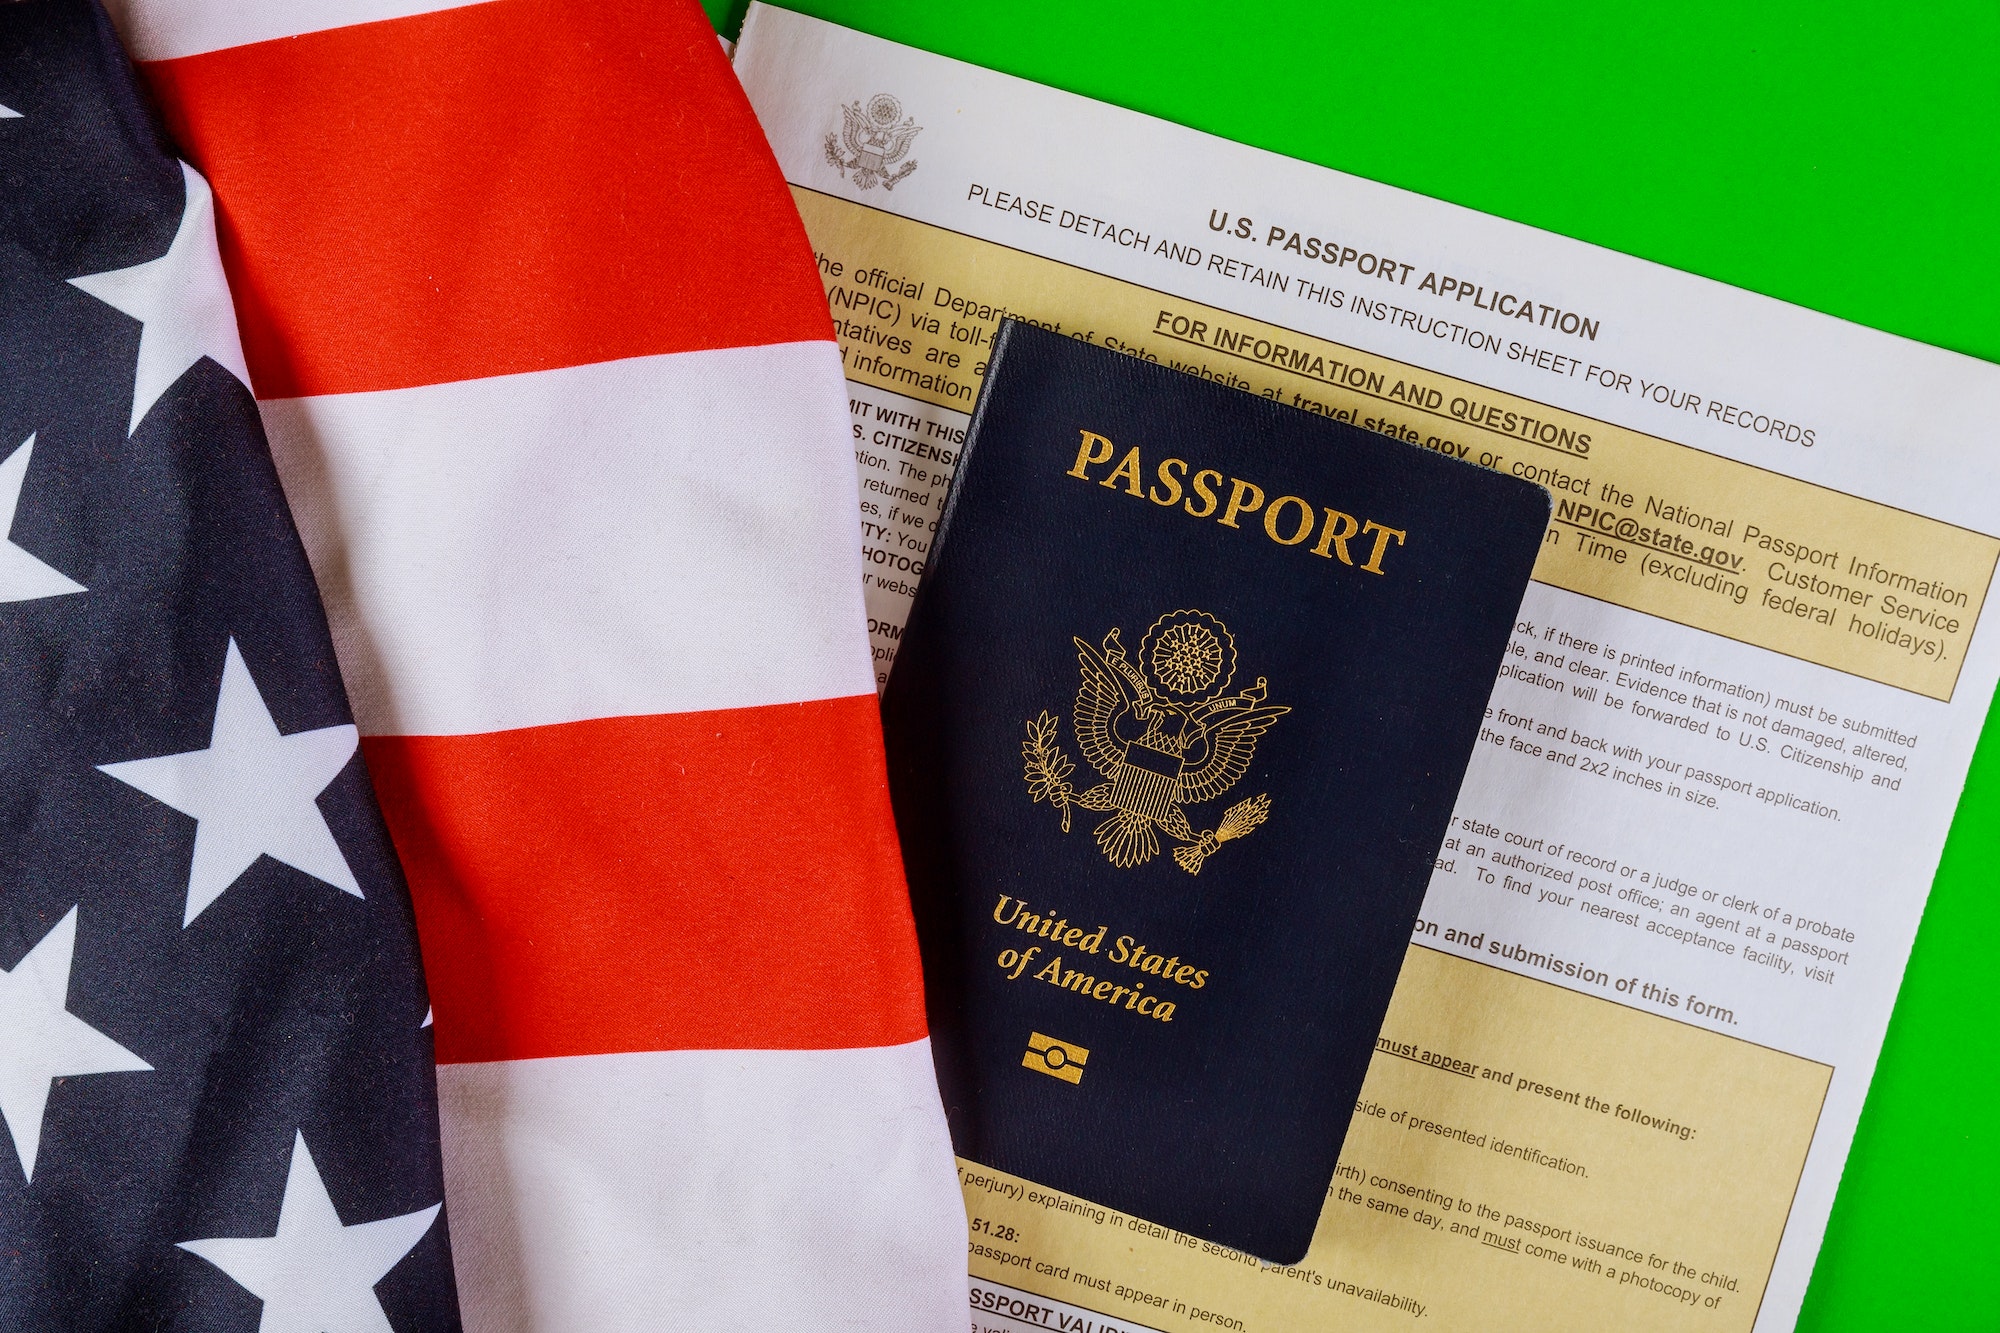 Applying form New Passport for U.S. passport application, flags of USA lying at passport